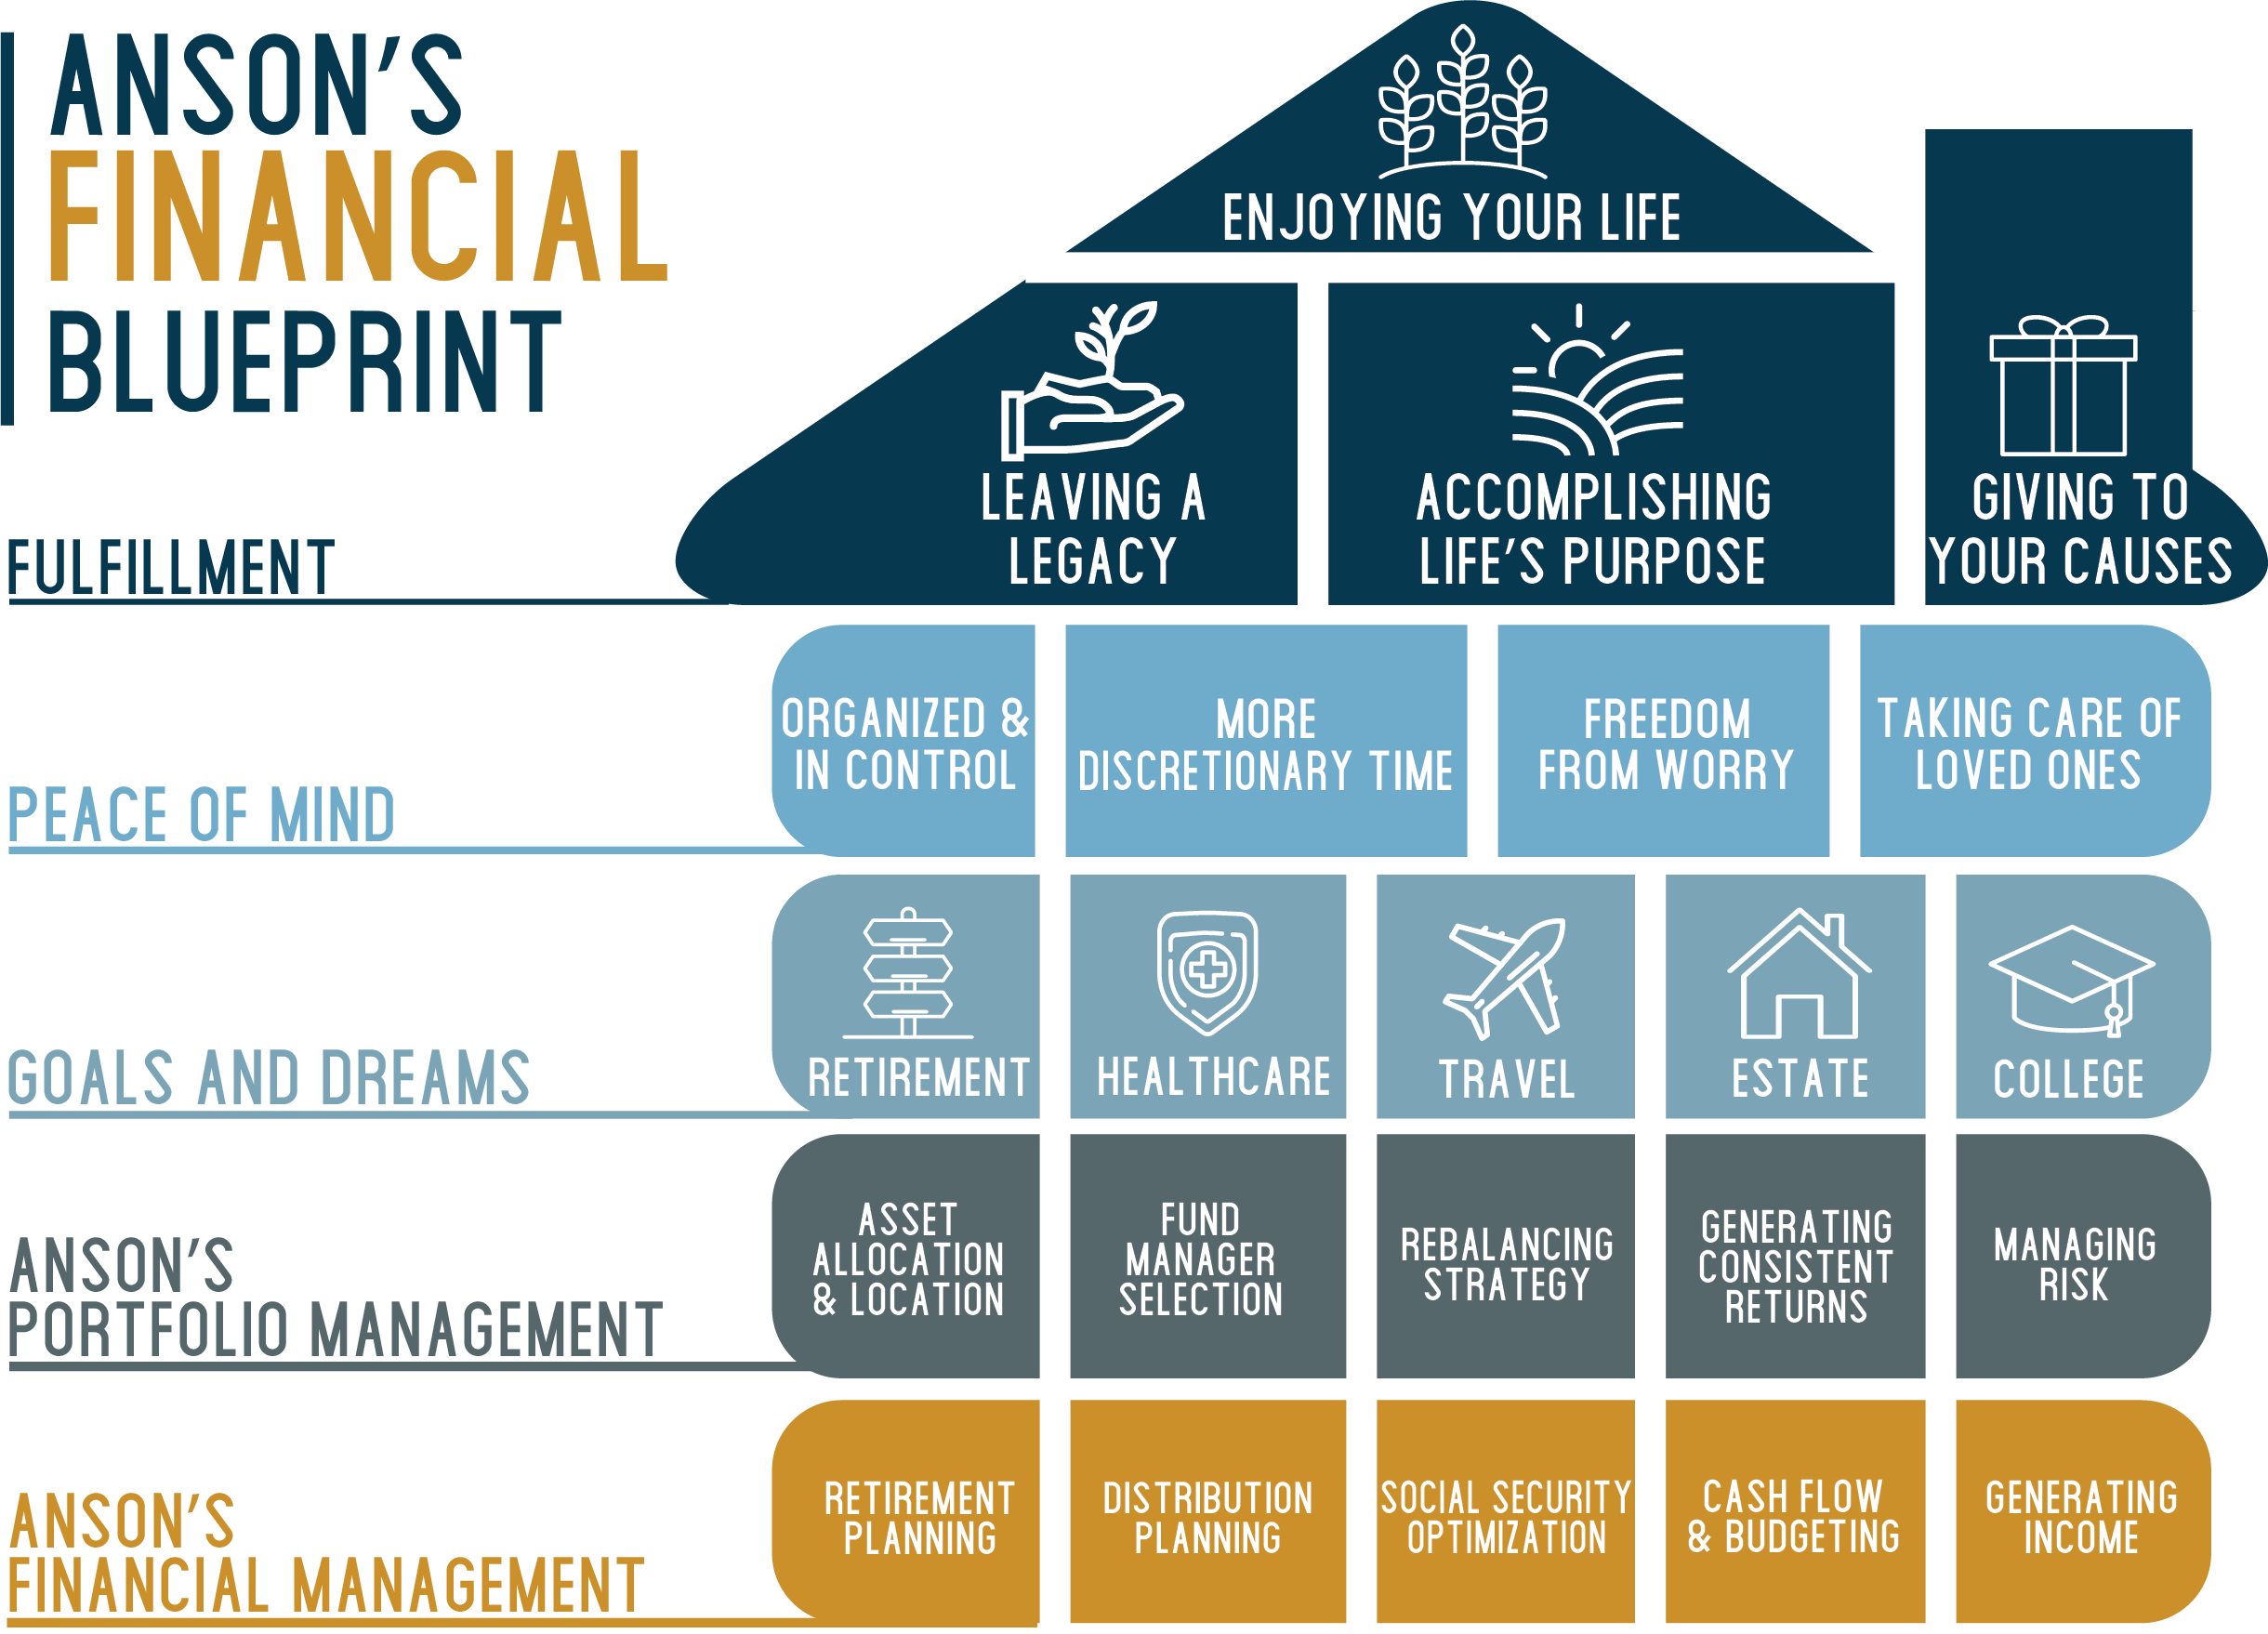 Anson's Financial Blueprint